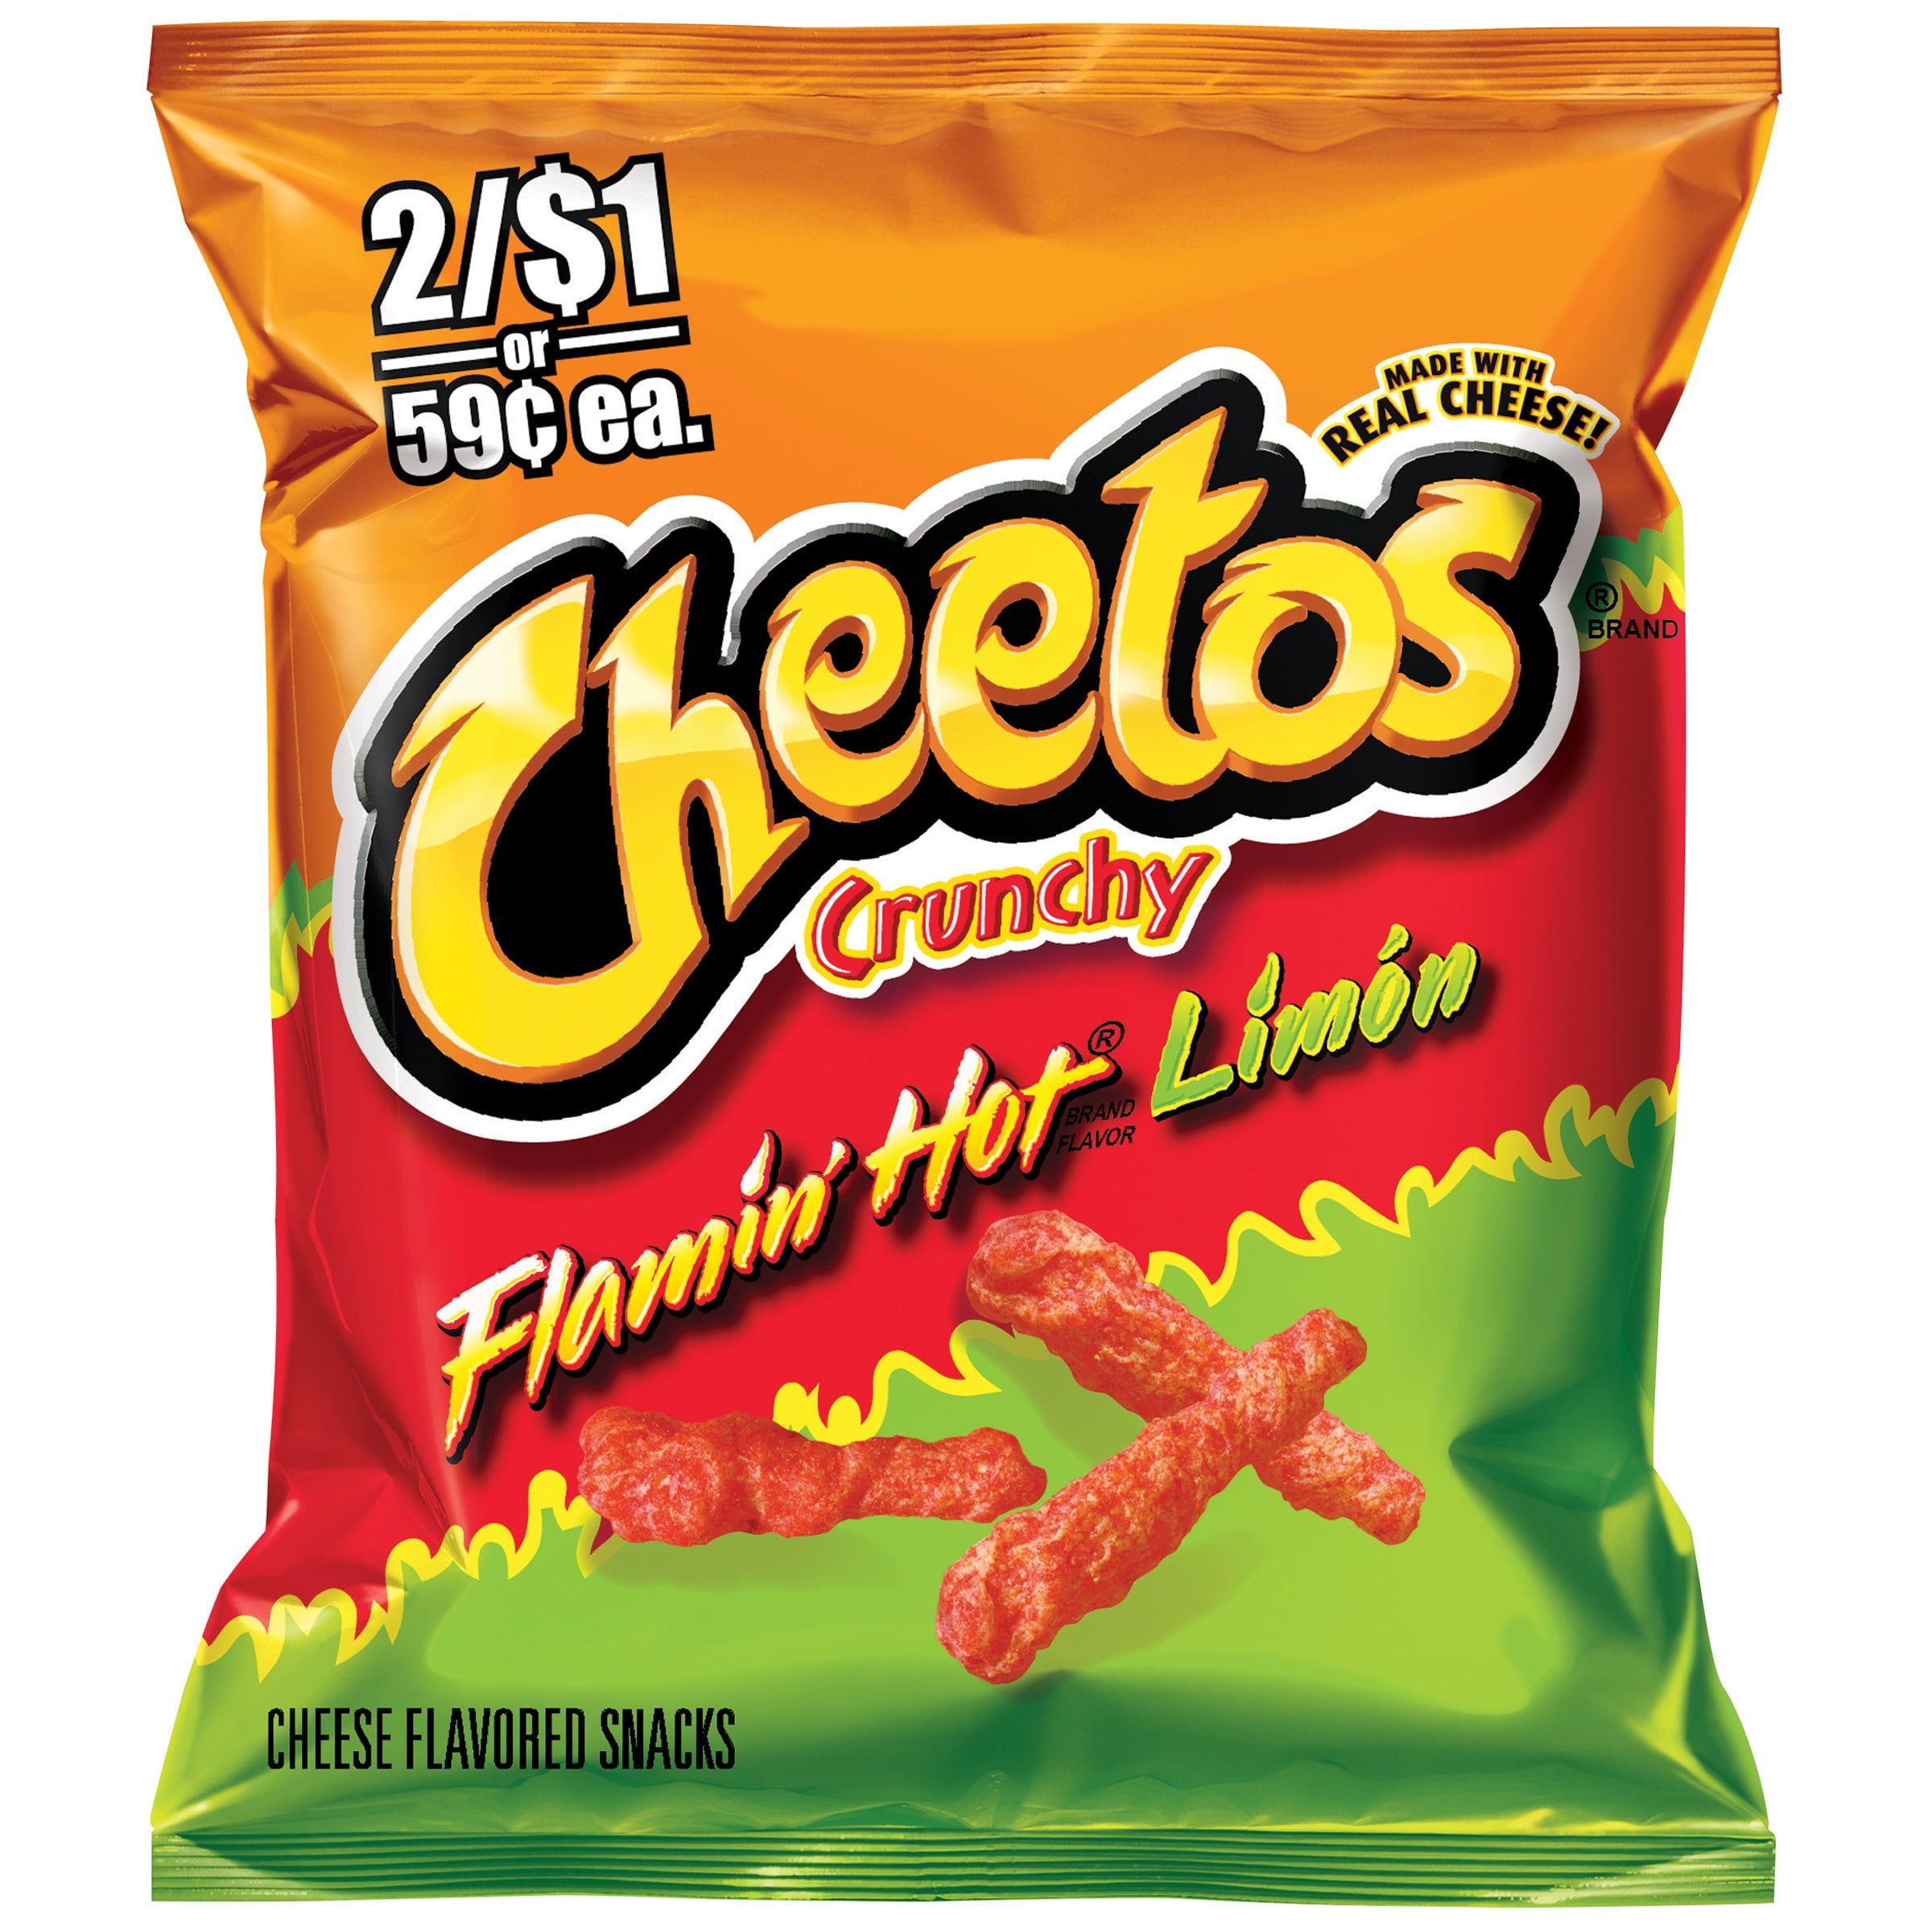 Cheetos Flamin Hot Limon Cheese Flavored Snacks 1125 Oz Bag.